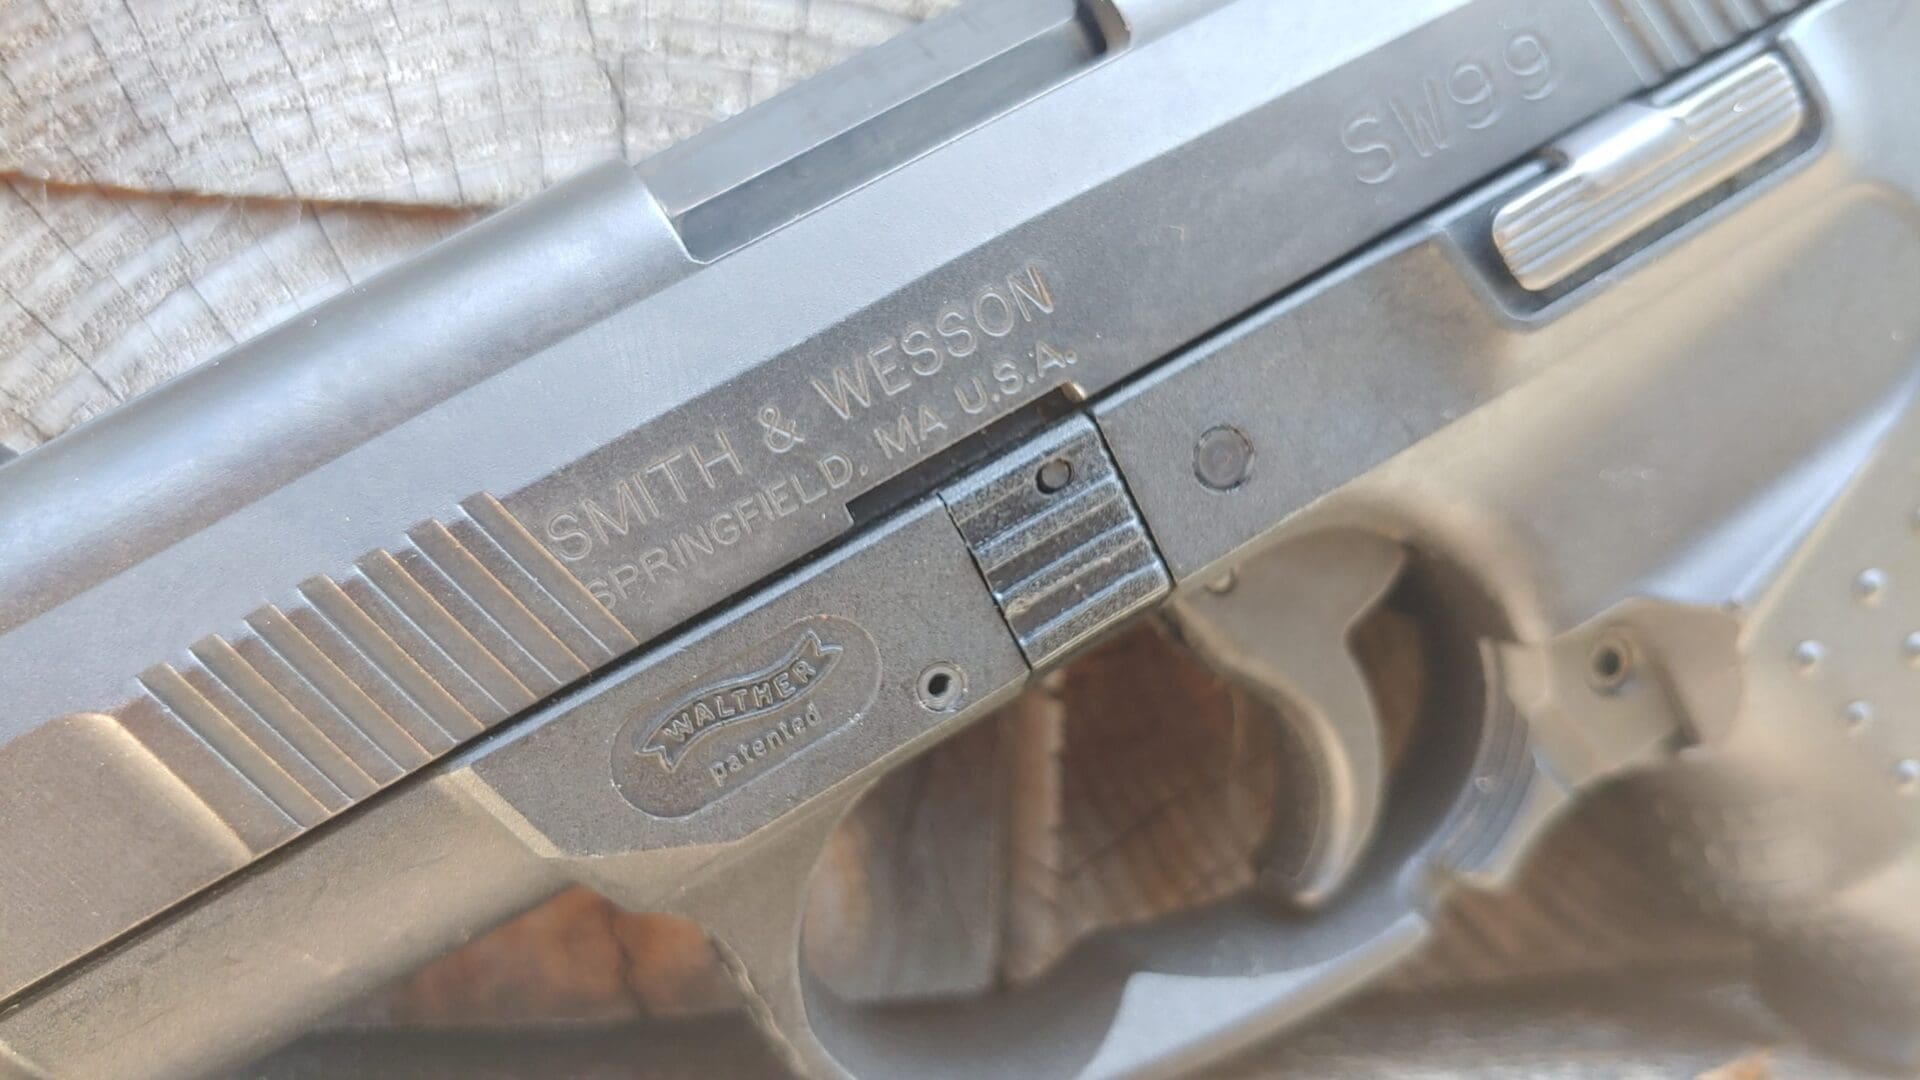 Smith & Wesson SW99c